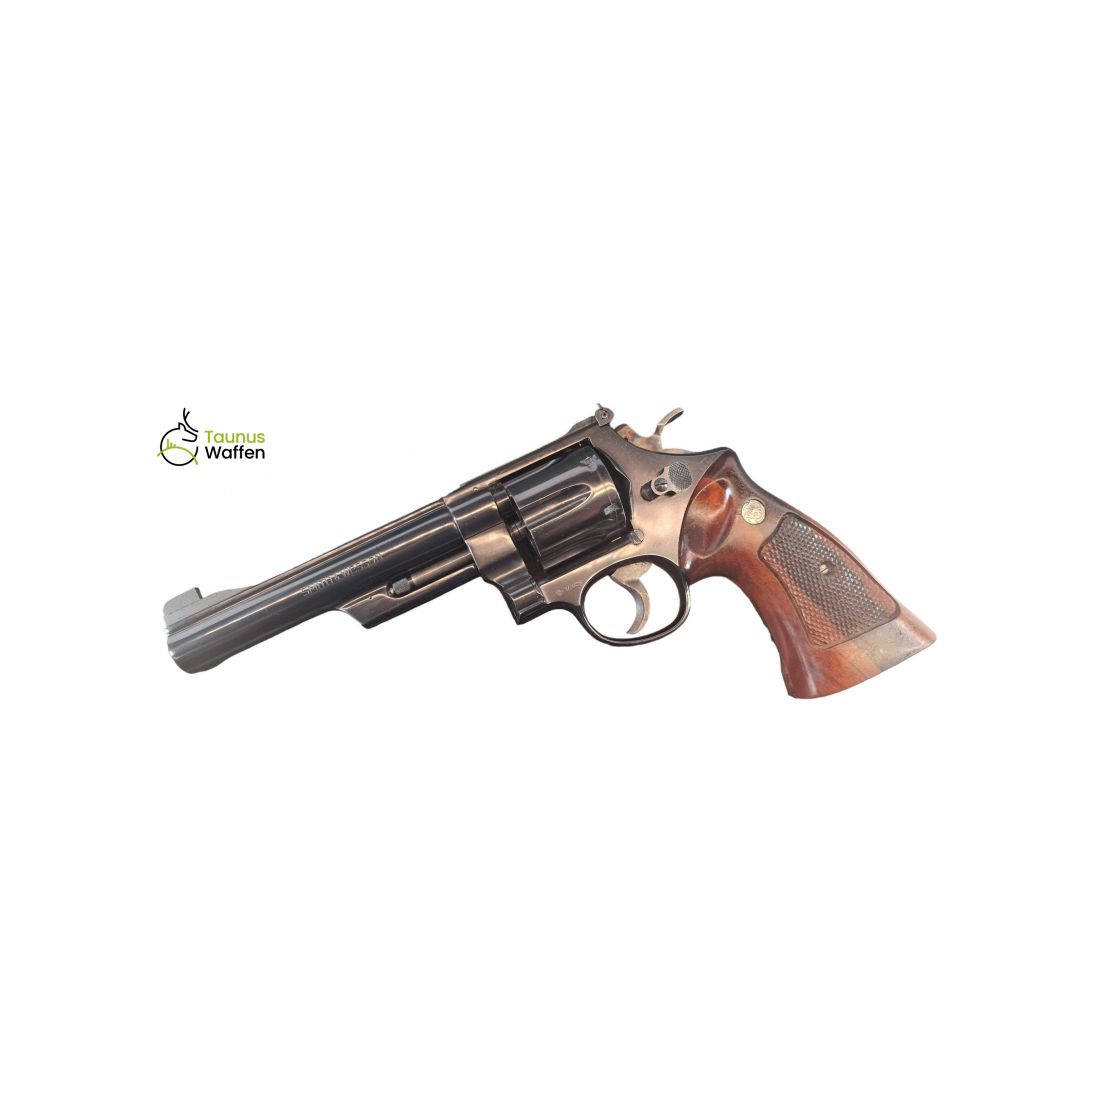 1955 Target Revolver Smith & Wesson Mod. 25-2 im Kal. 45ACP bei taunus-waffen.de